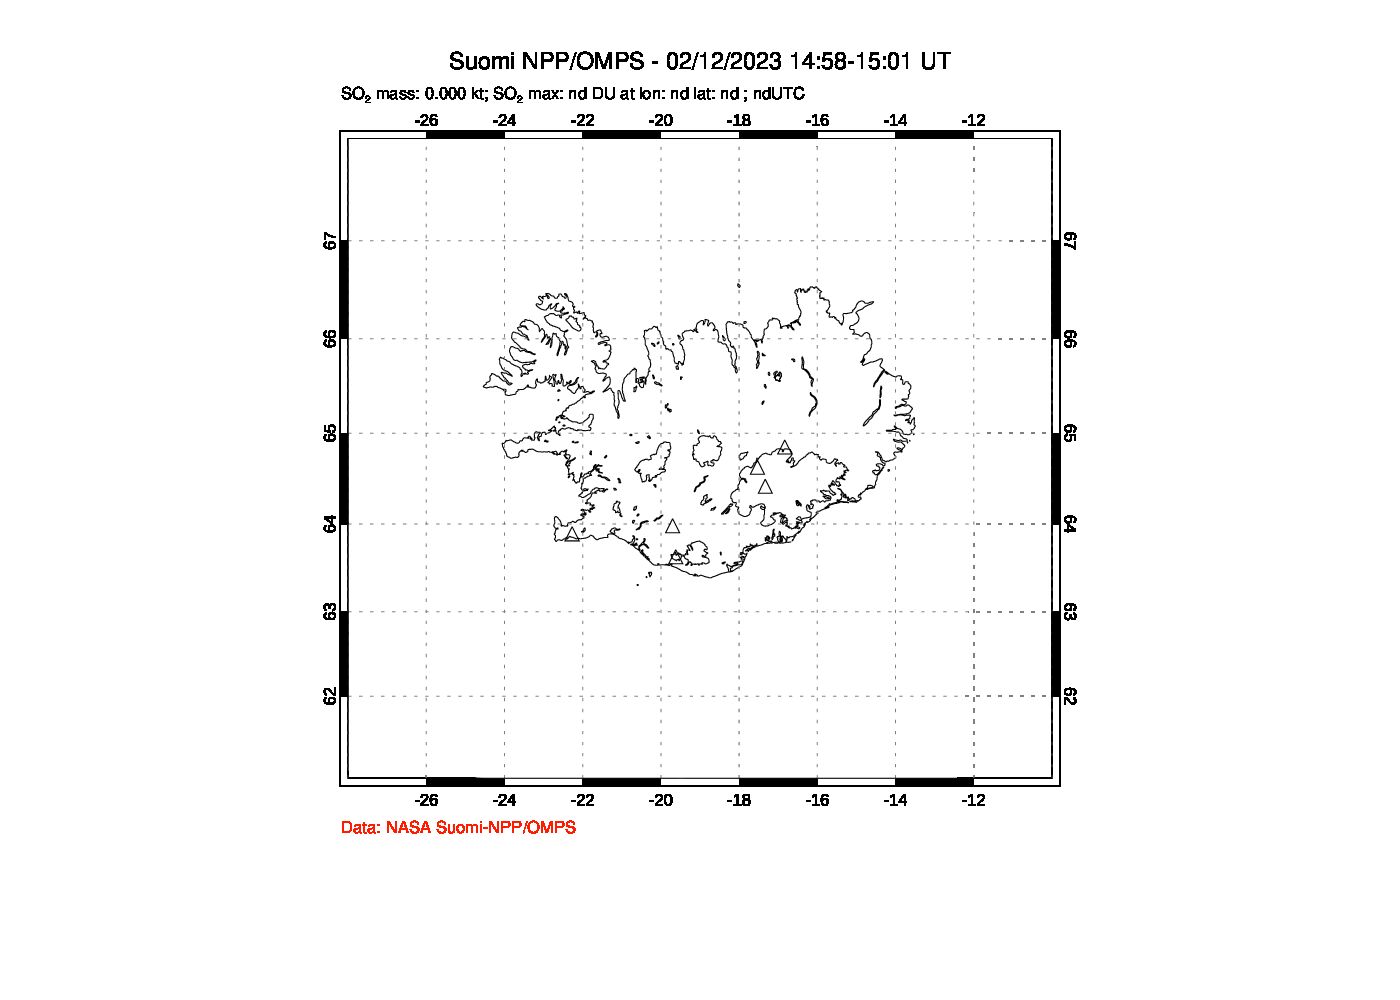 A sulfur dioxide image over Iceland on Feb 12, 2023.